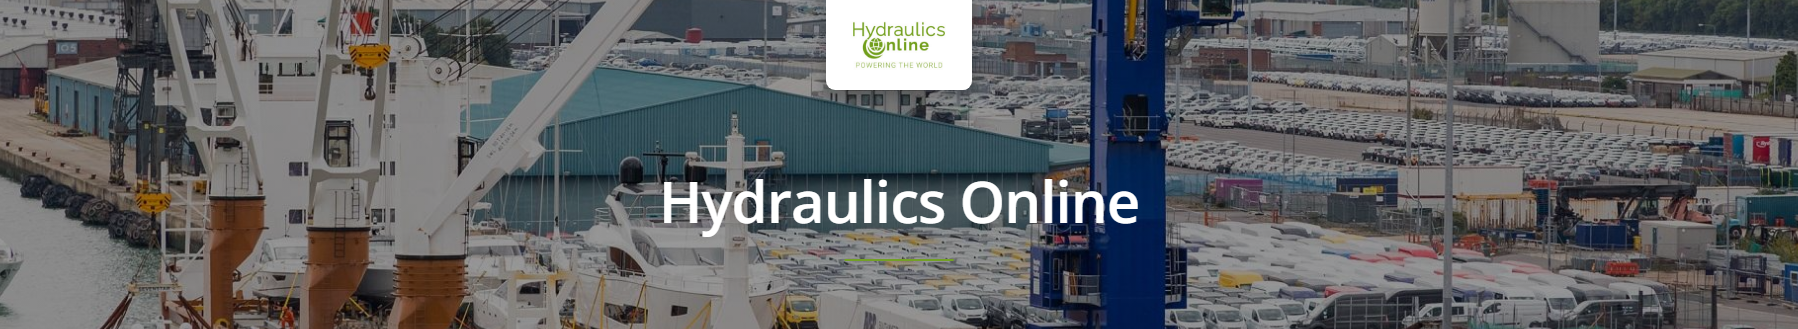 Hydraulics Online Power Packs